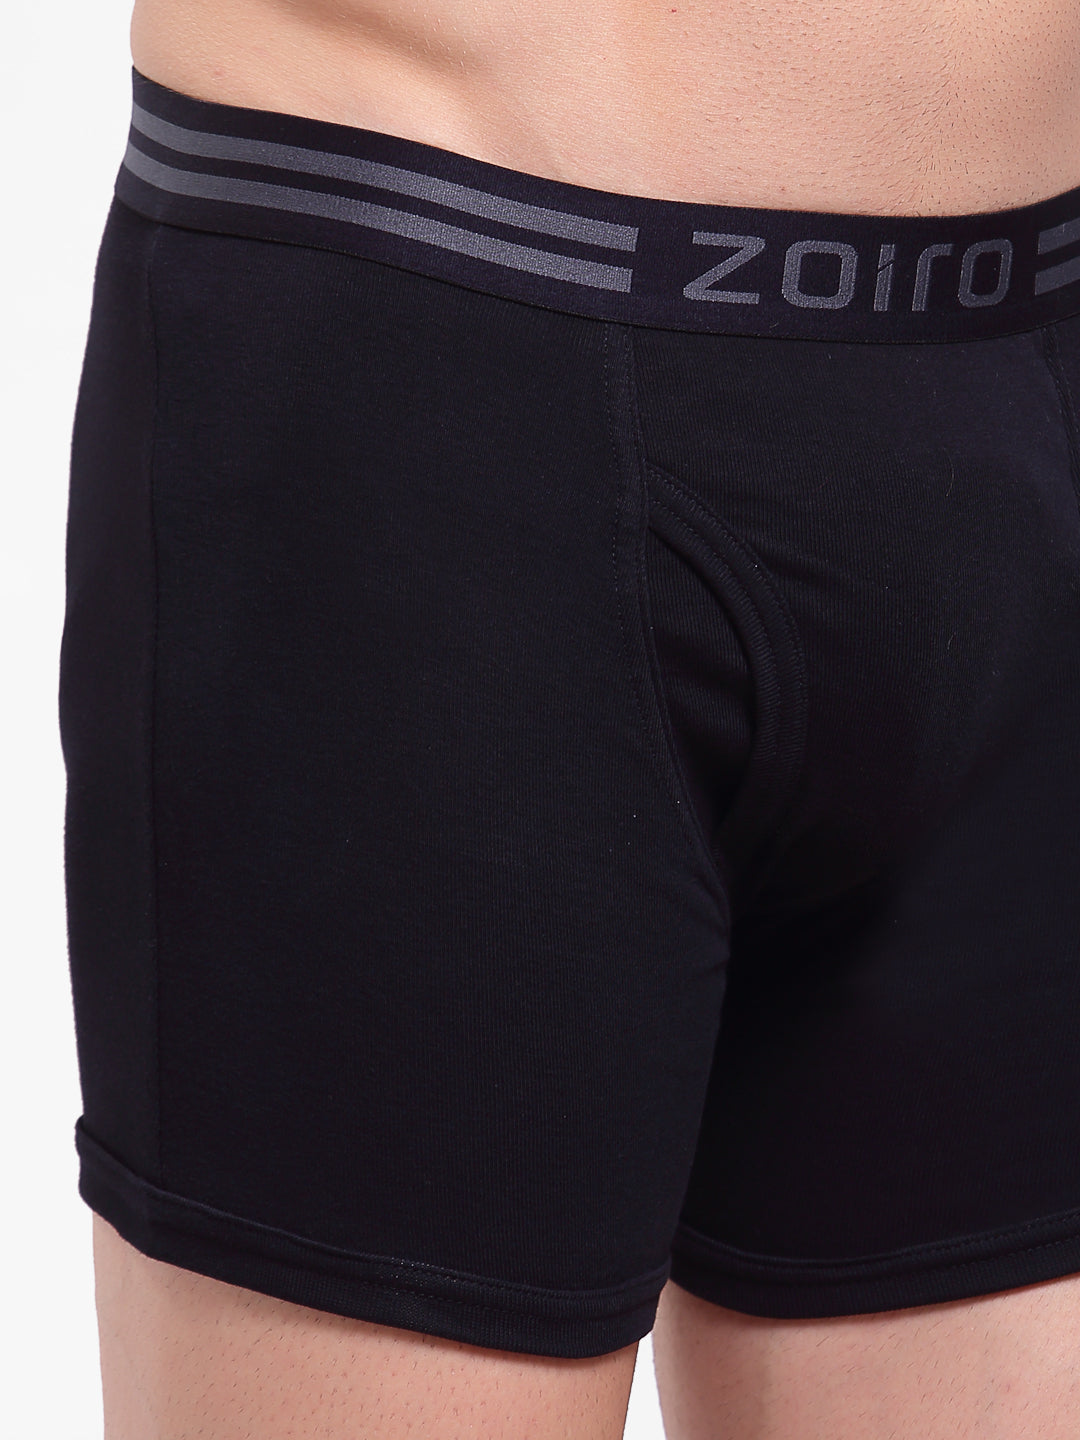 Zoiro Men&#39;s Cotton Soft Classics Long Trunk - Black